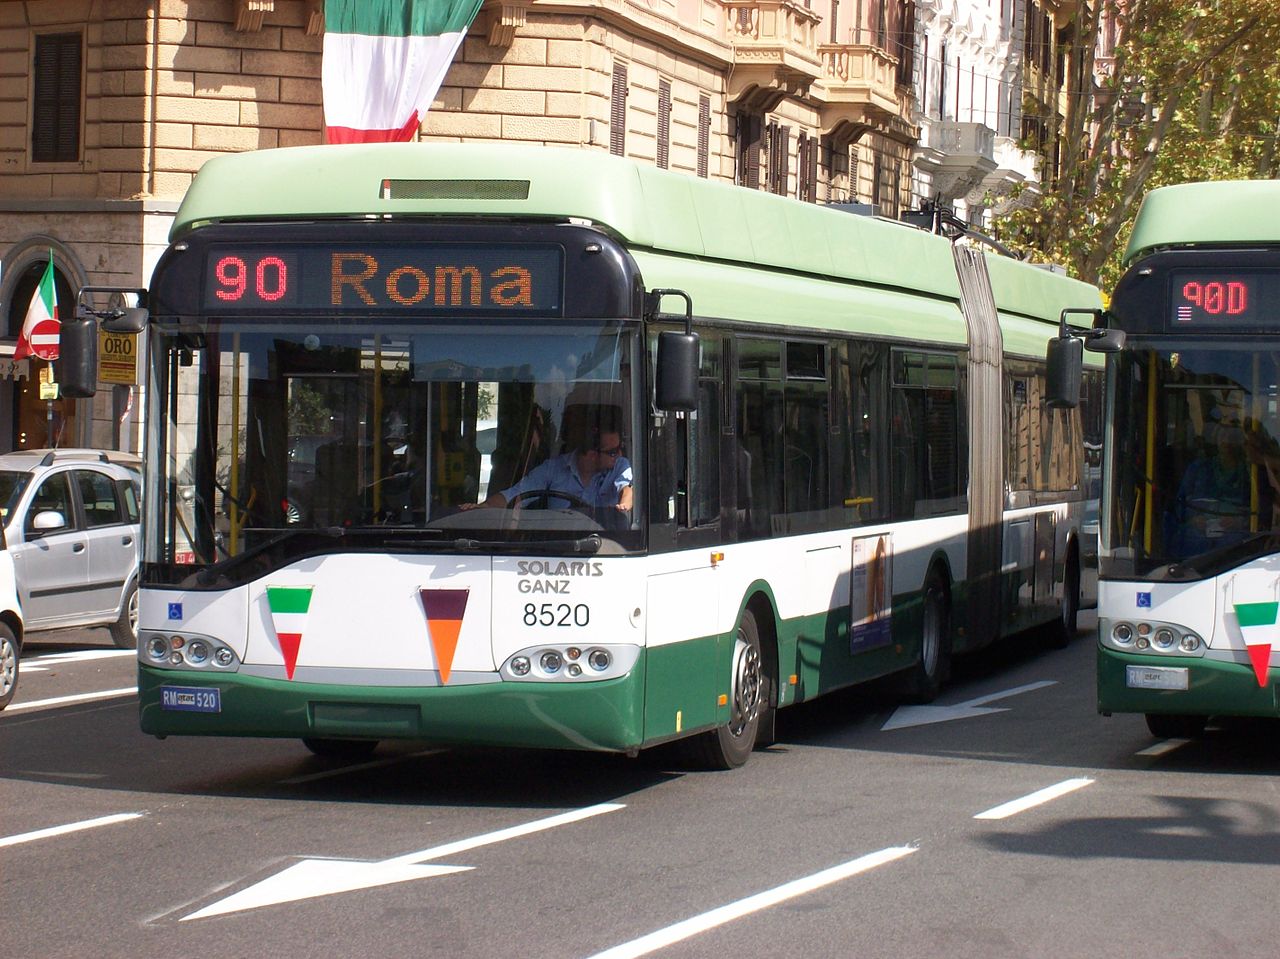 File:2010-09-19 Solaris Ganz Trollino ATAC 8520 Linea 90 Roma.jpg ...